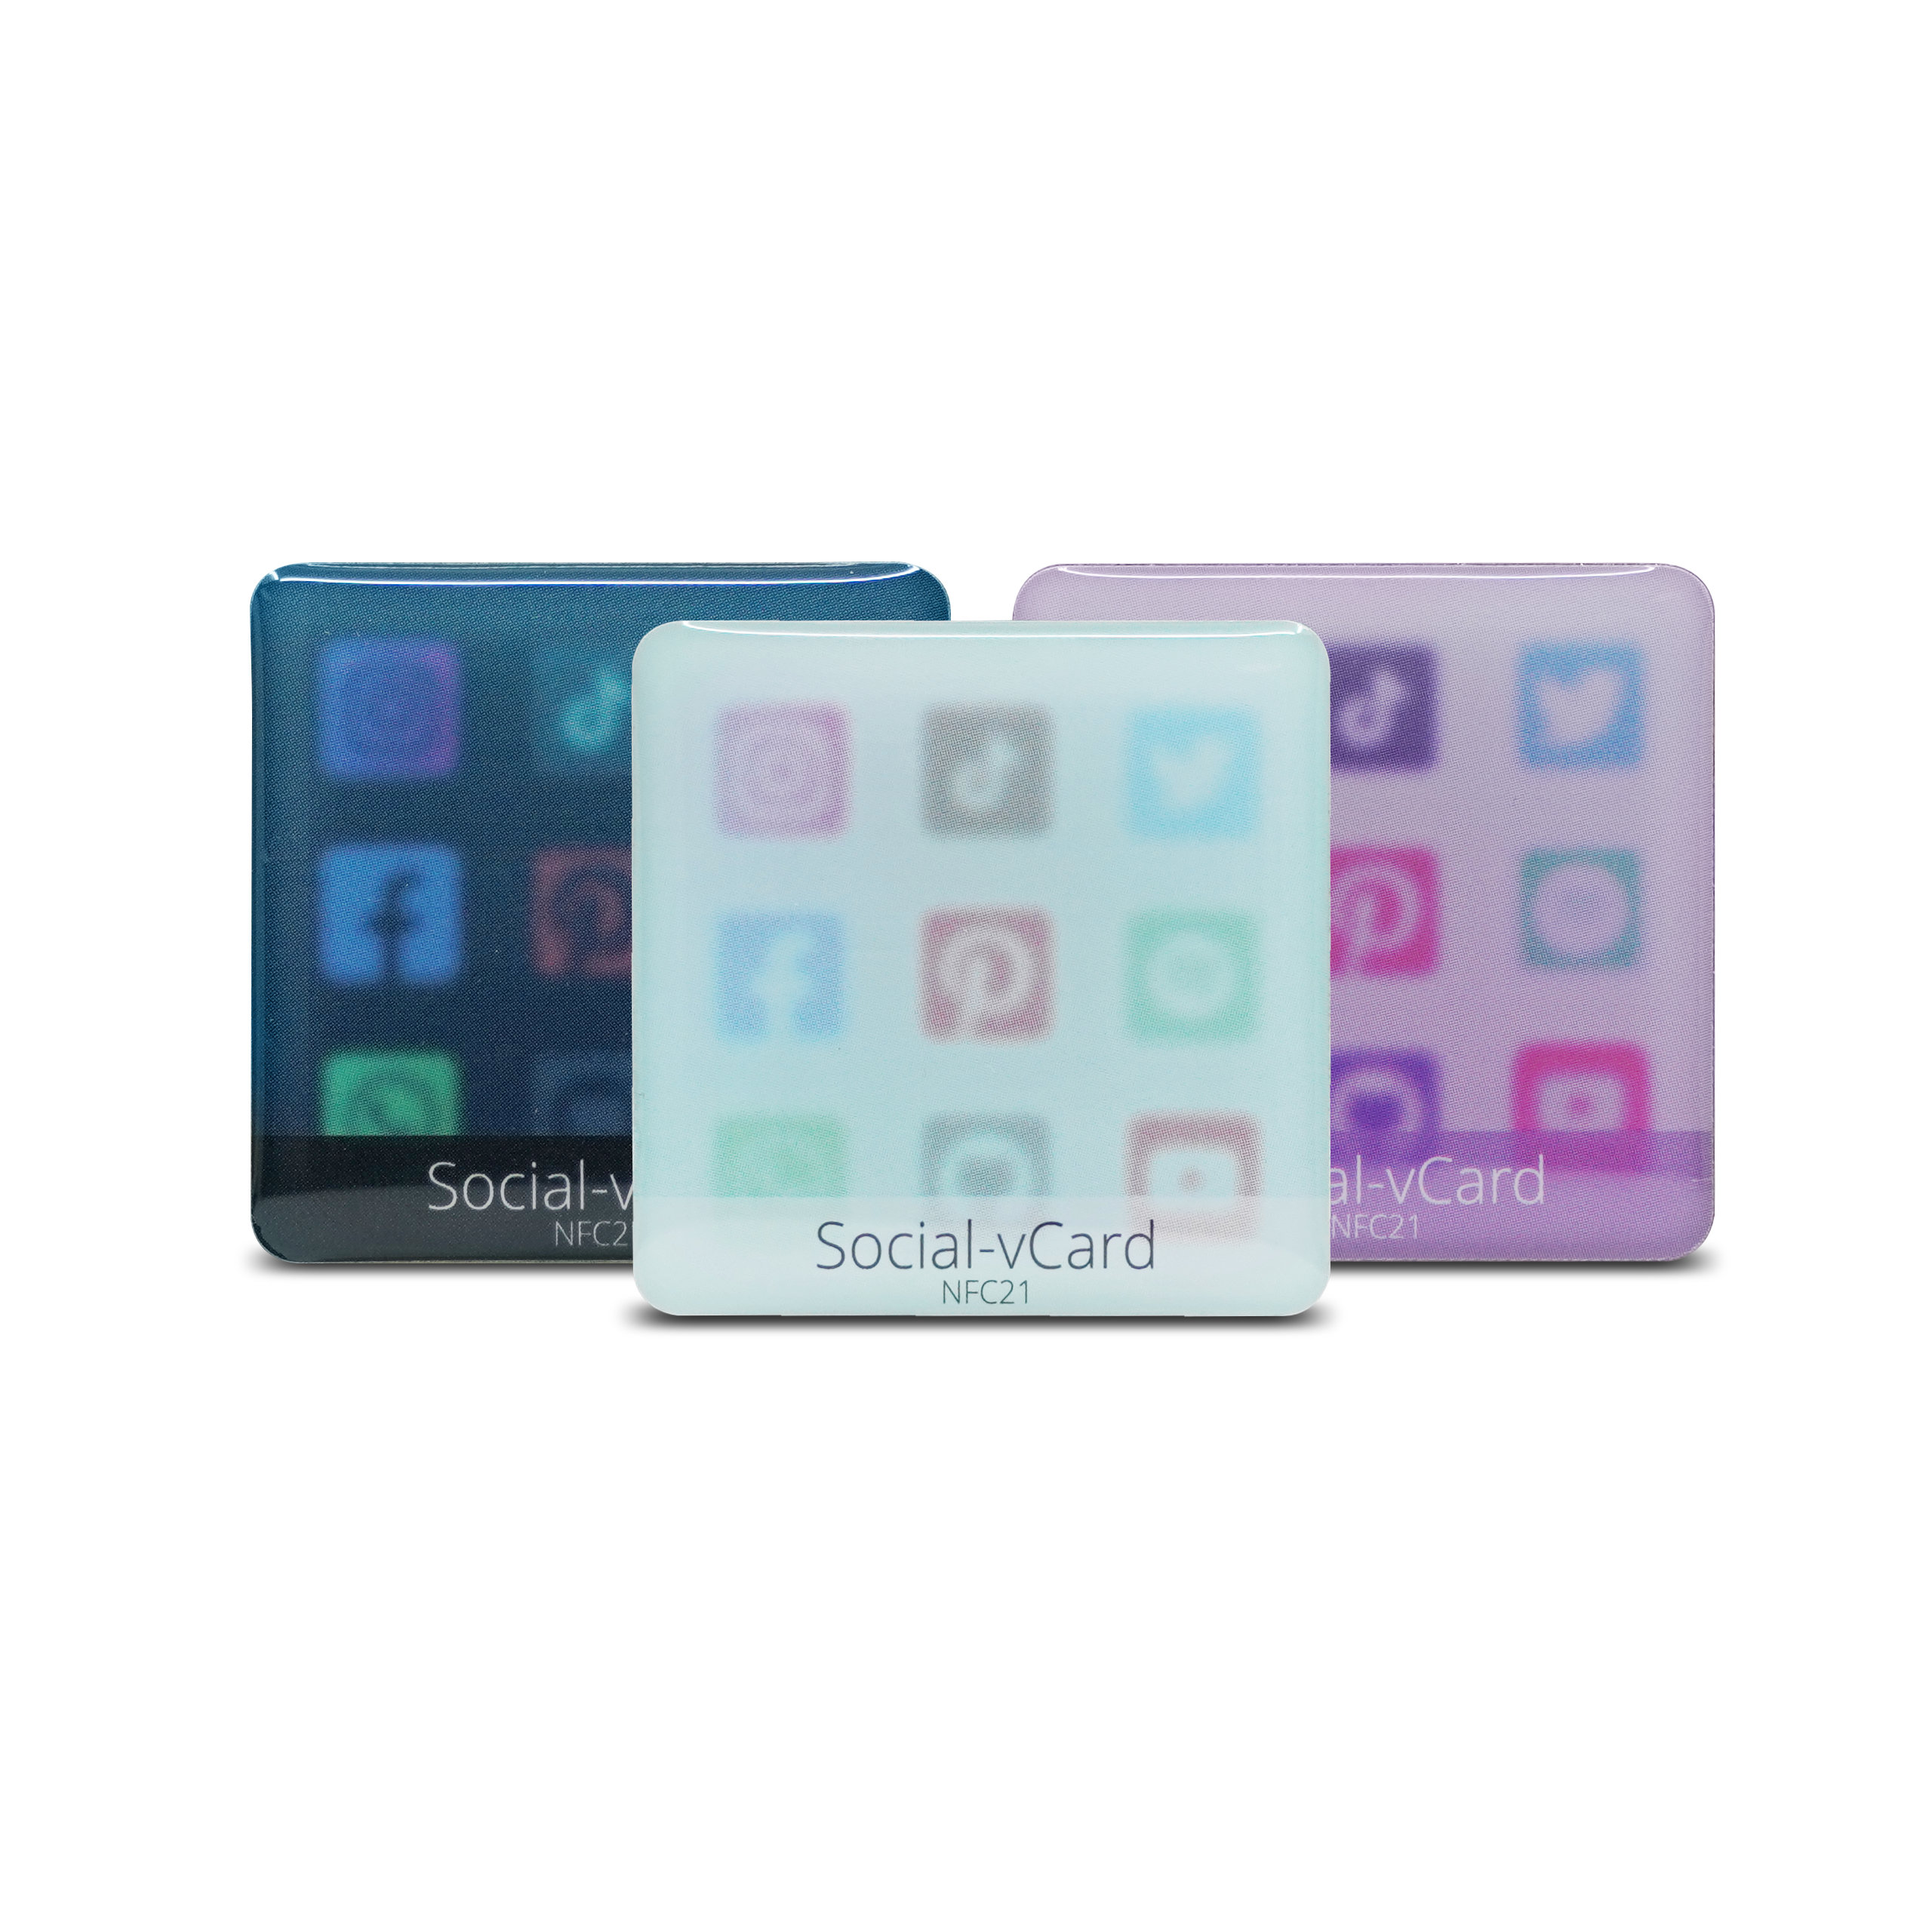 Social-vCard Glow - Digital social media sticker - PET - 35 x 35 mm - pink